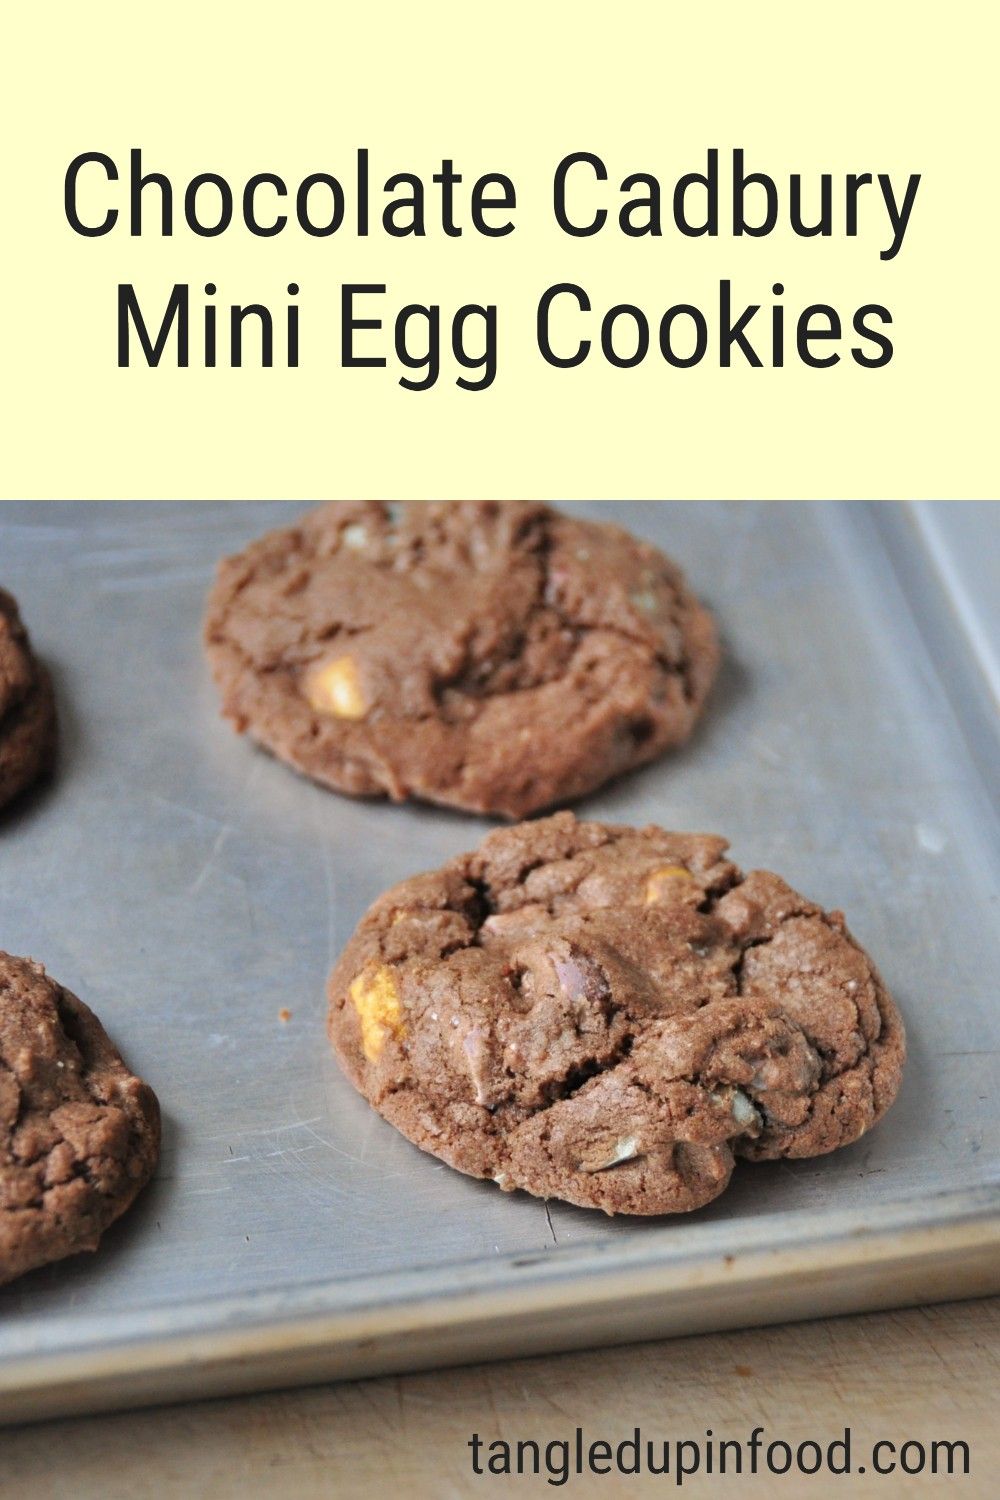 Cookies on baking sheet with text reading "Chocolate Cadbury Mini Egg Cookies"